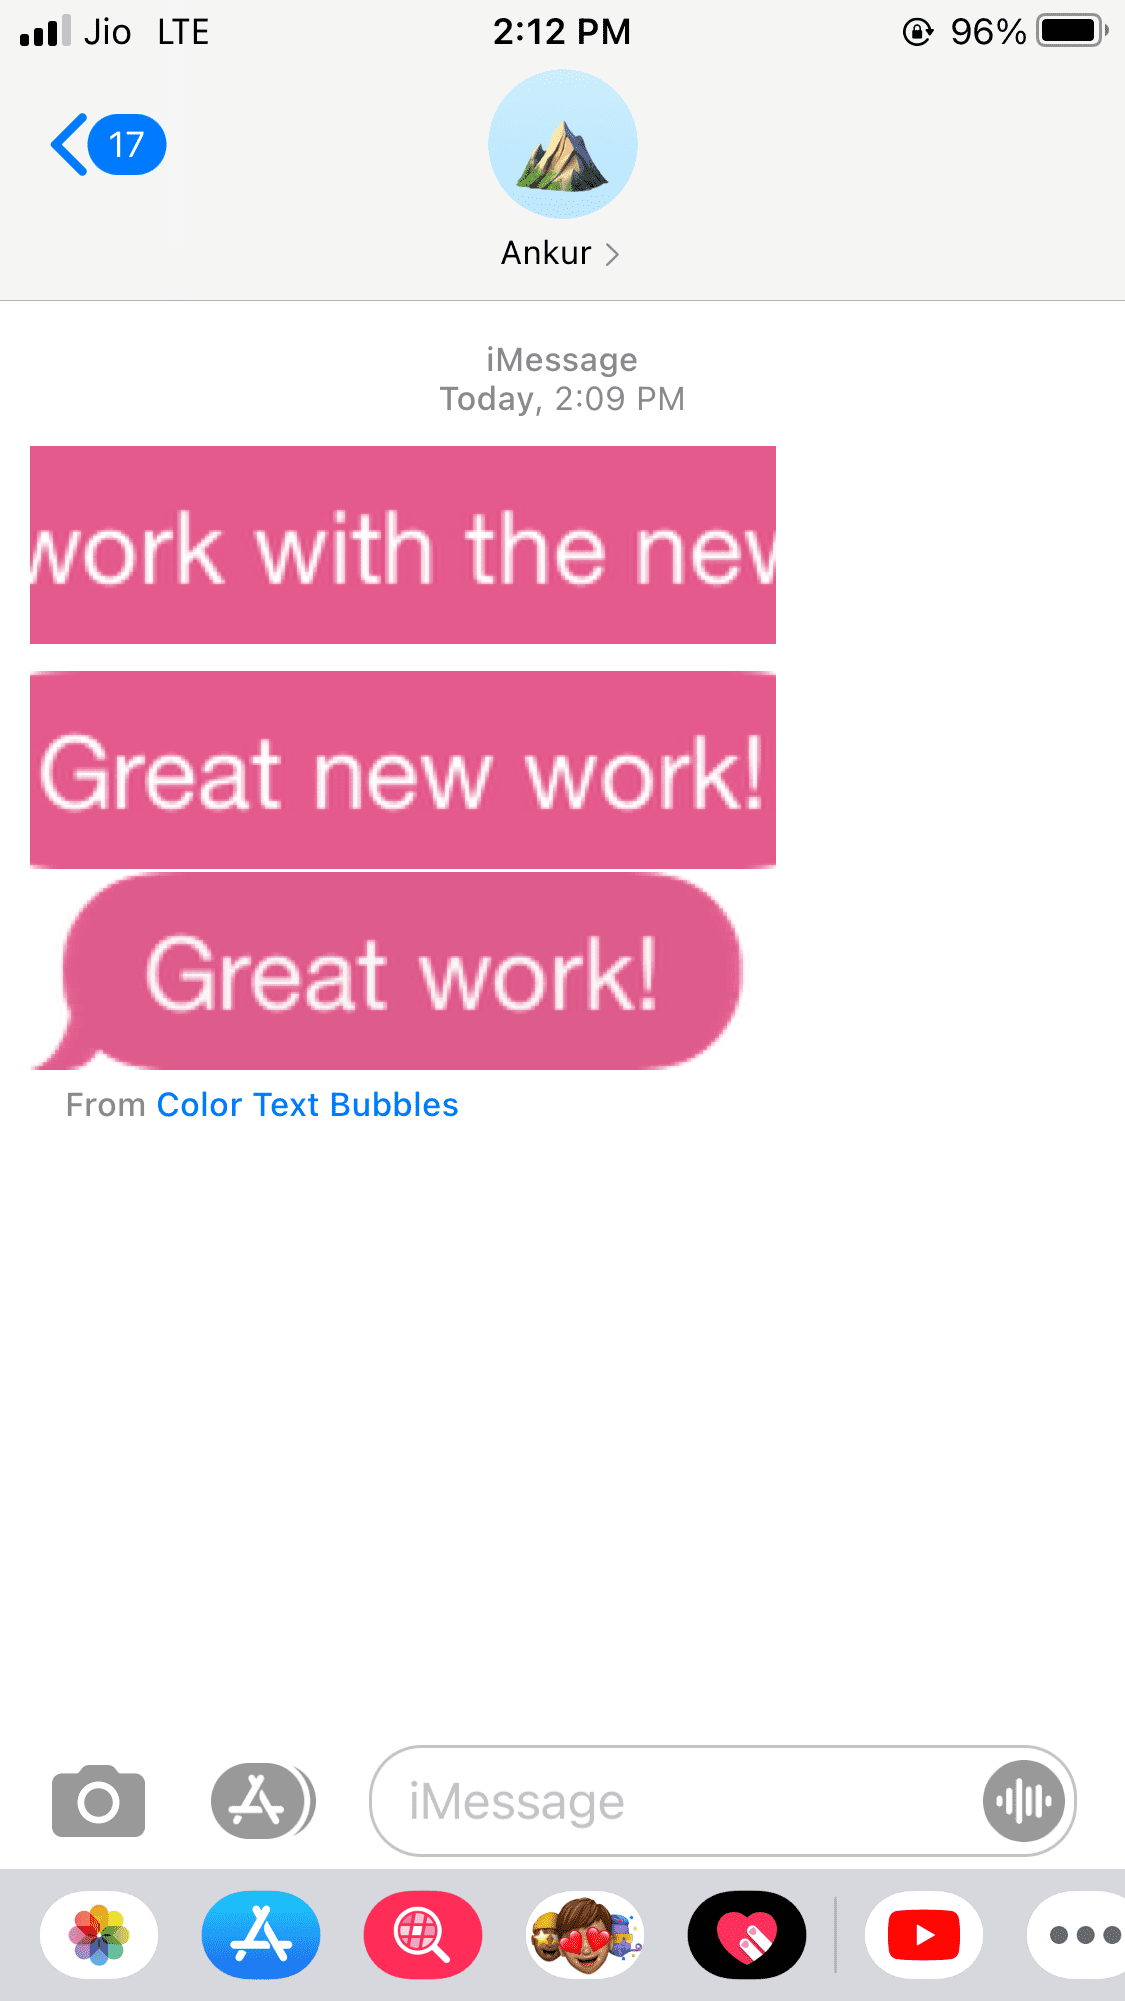 Sending iMessage in colored bubbles